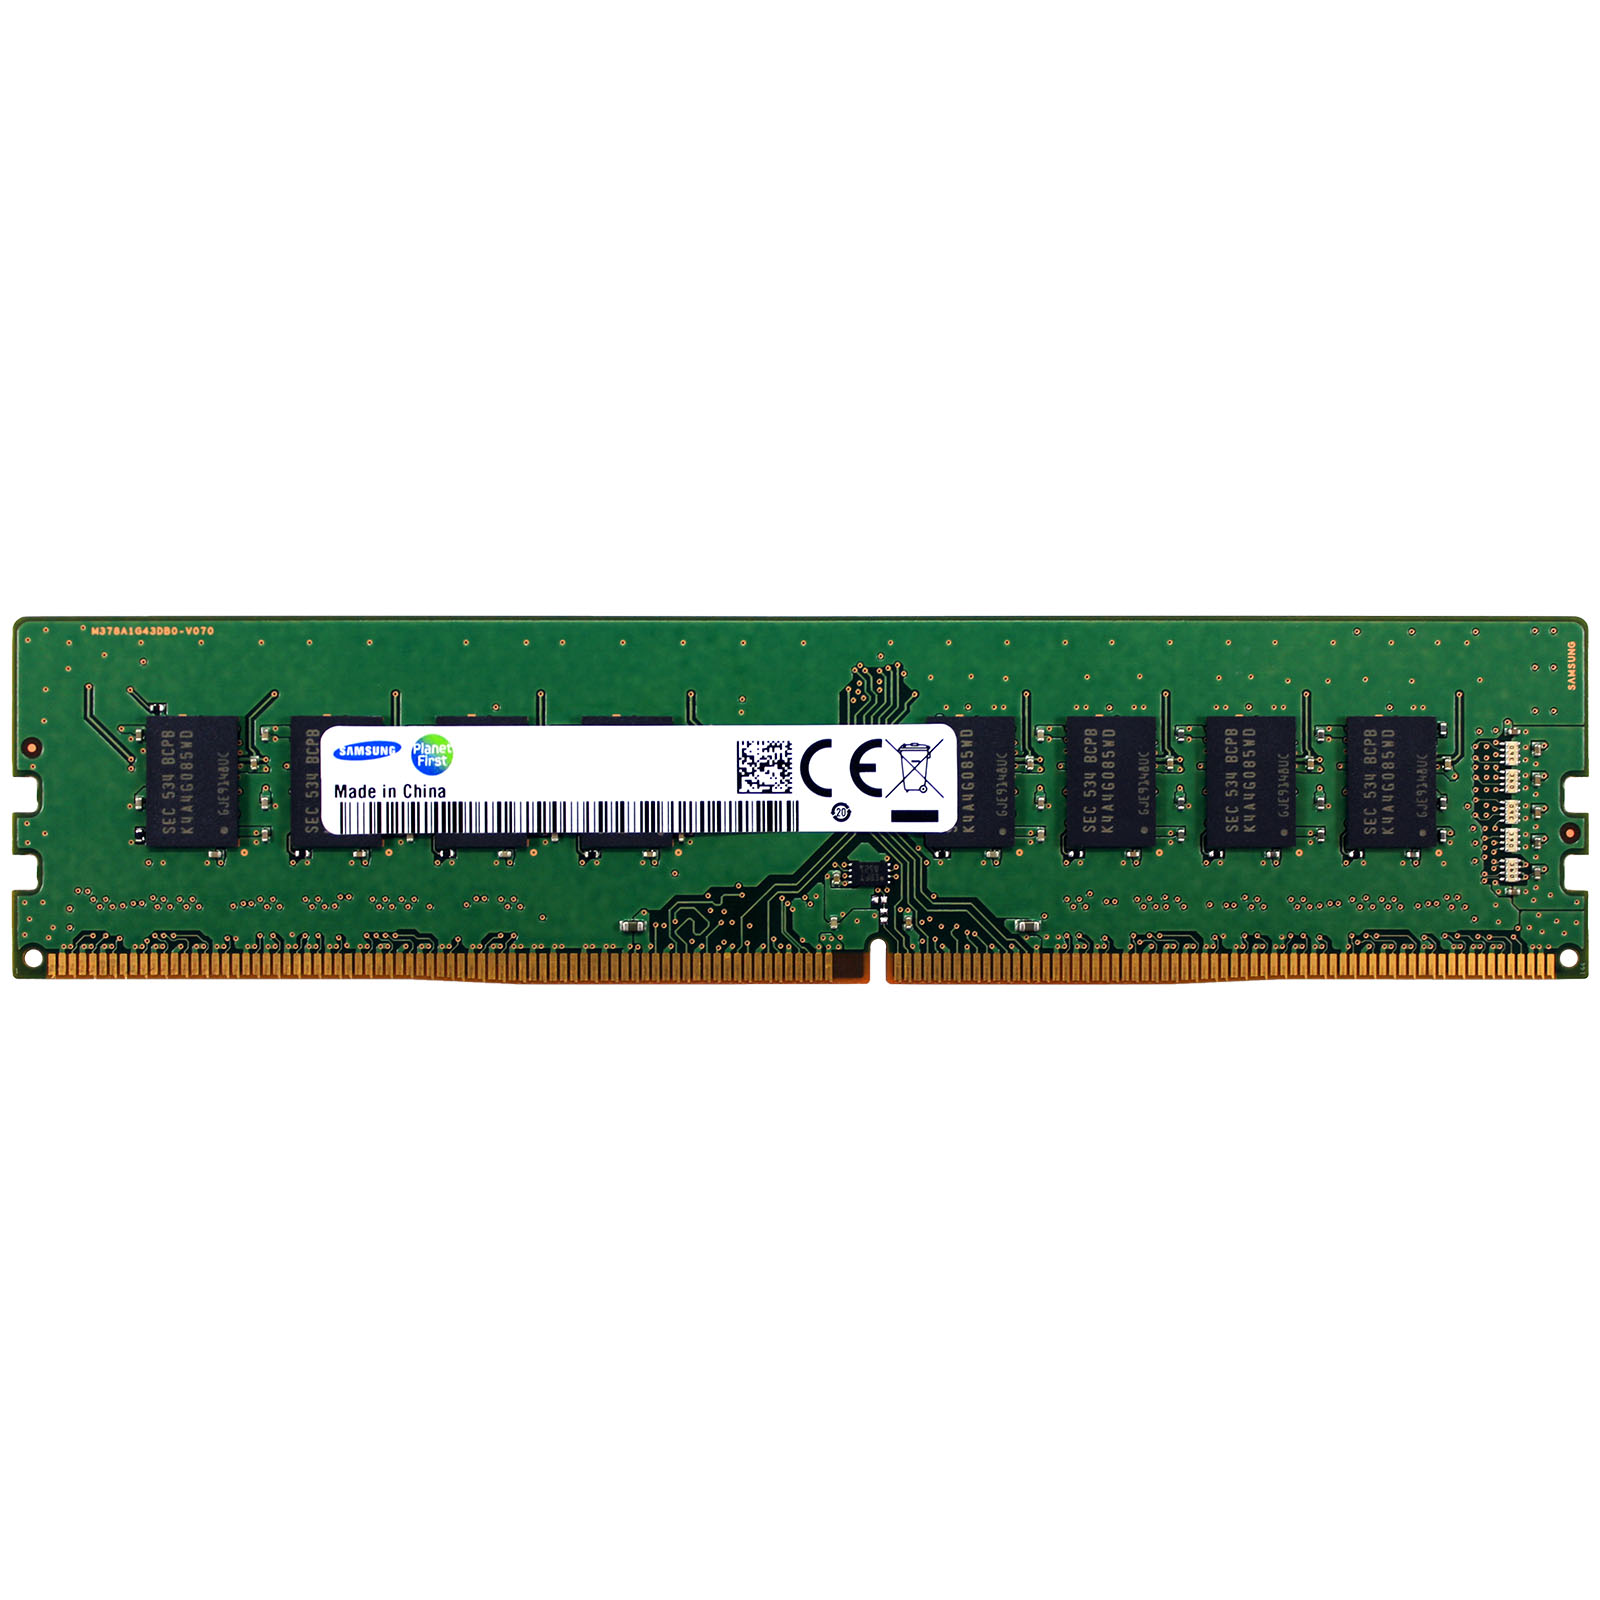 SAMSUNG 1GB 800MHz DDR2 PC Ram PC2-6400